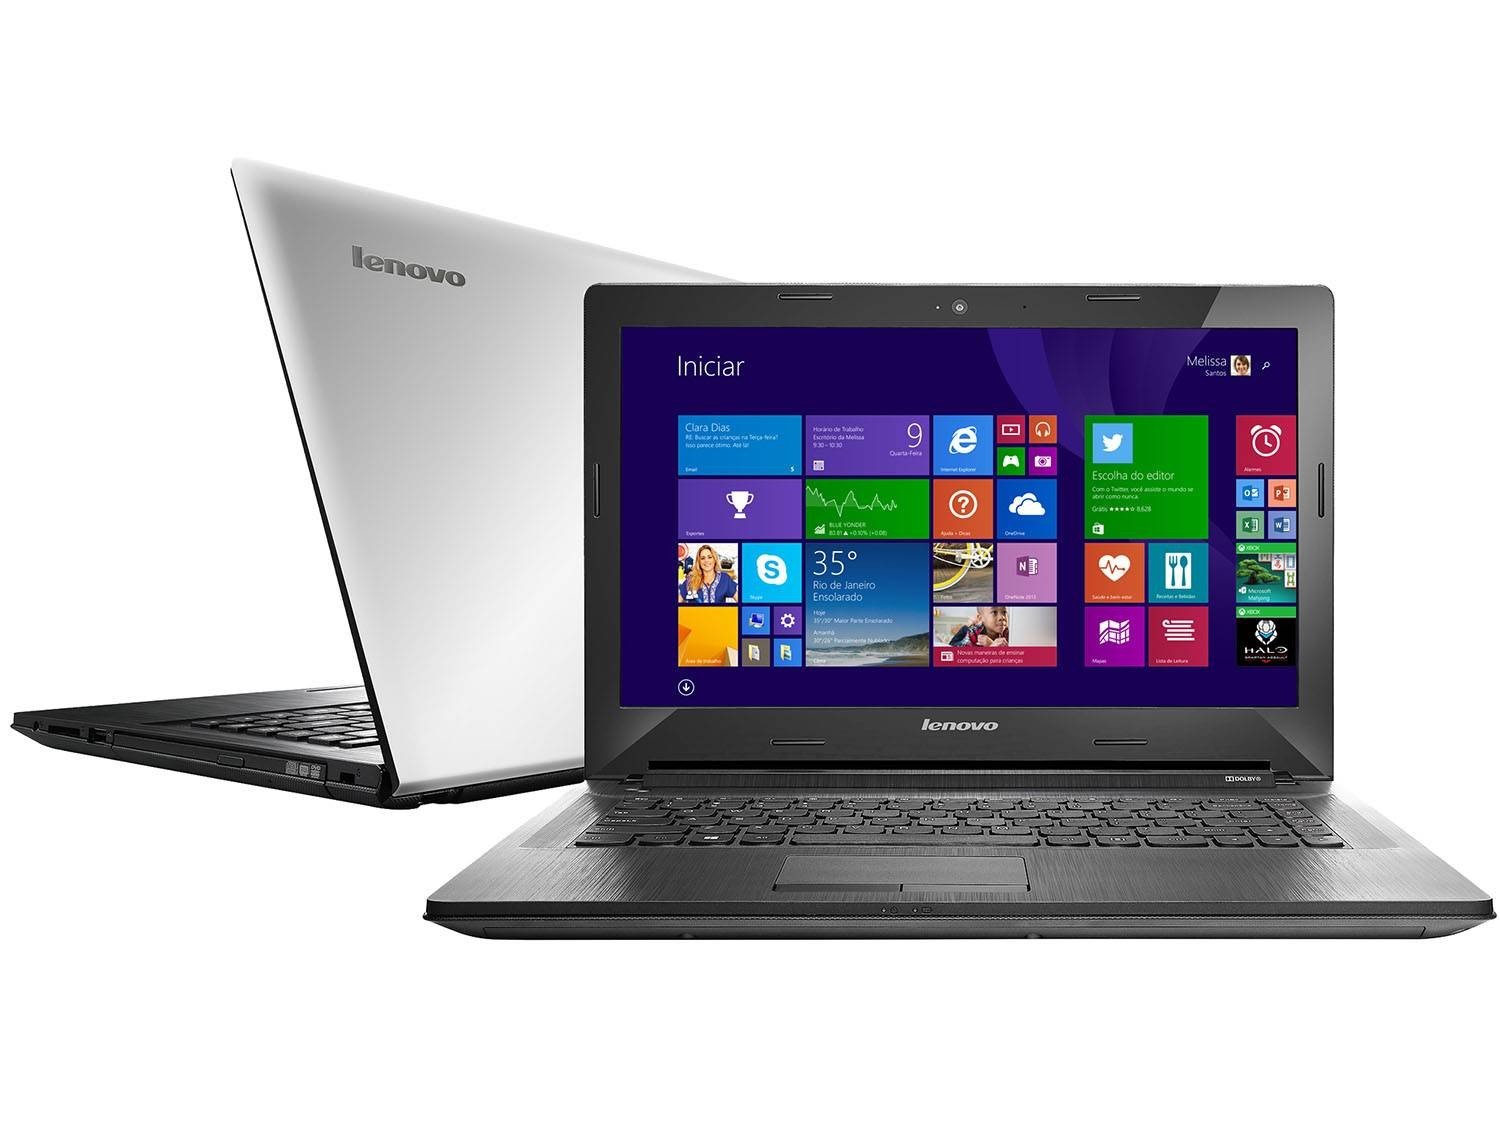 Notebook Lenovo G40 com Intel Core i5 4GB 1TB Windows 8.1 LED 14 HDMI